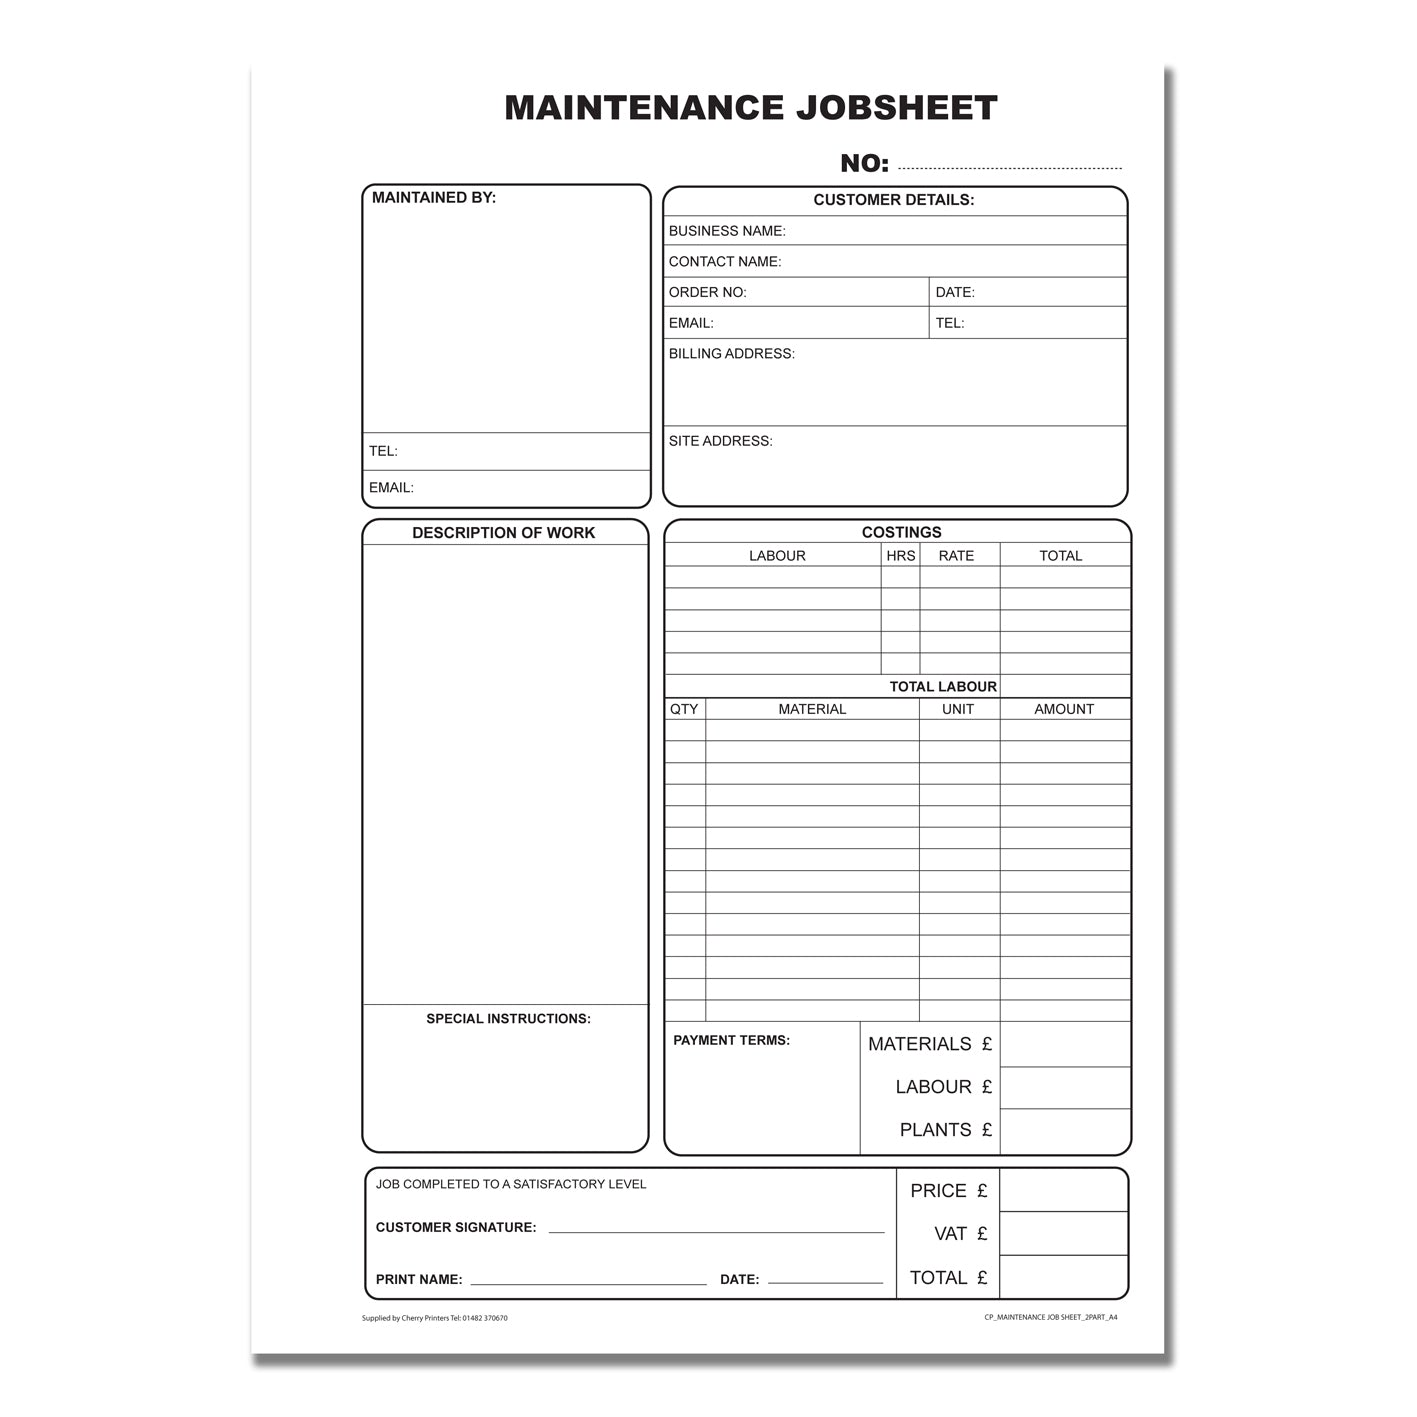 NCR Maintenance Job Sheet Book A4 Duplicate